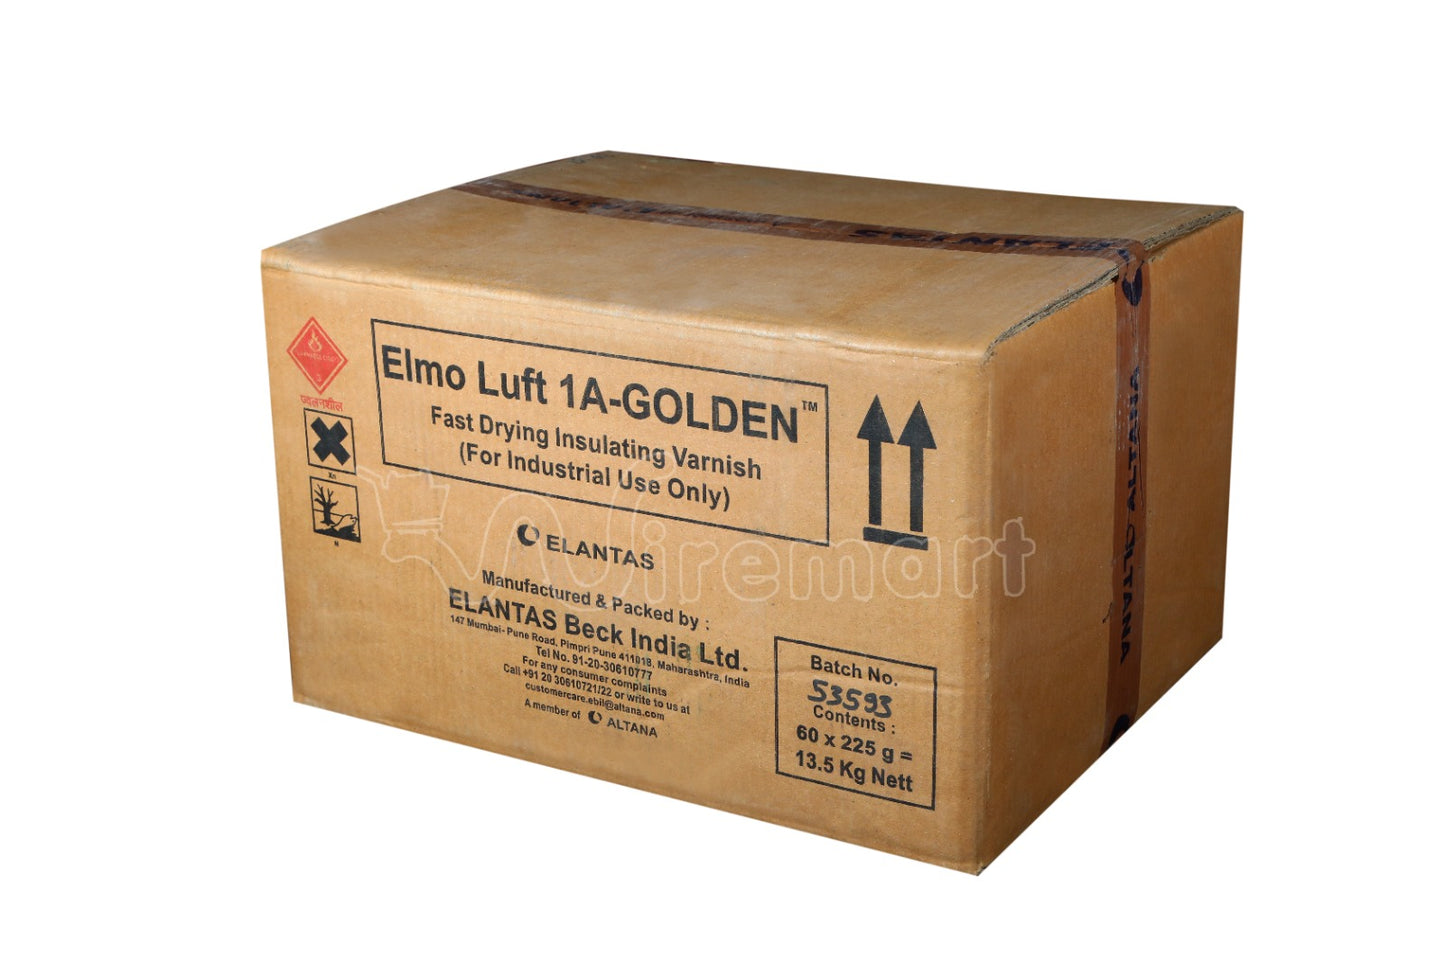 Dr Beck Insulating Varnish Elmo Lufta Fast Drying A1 Golden